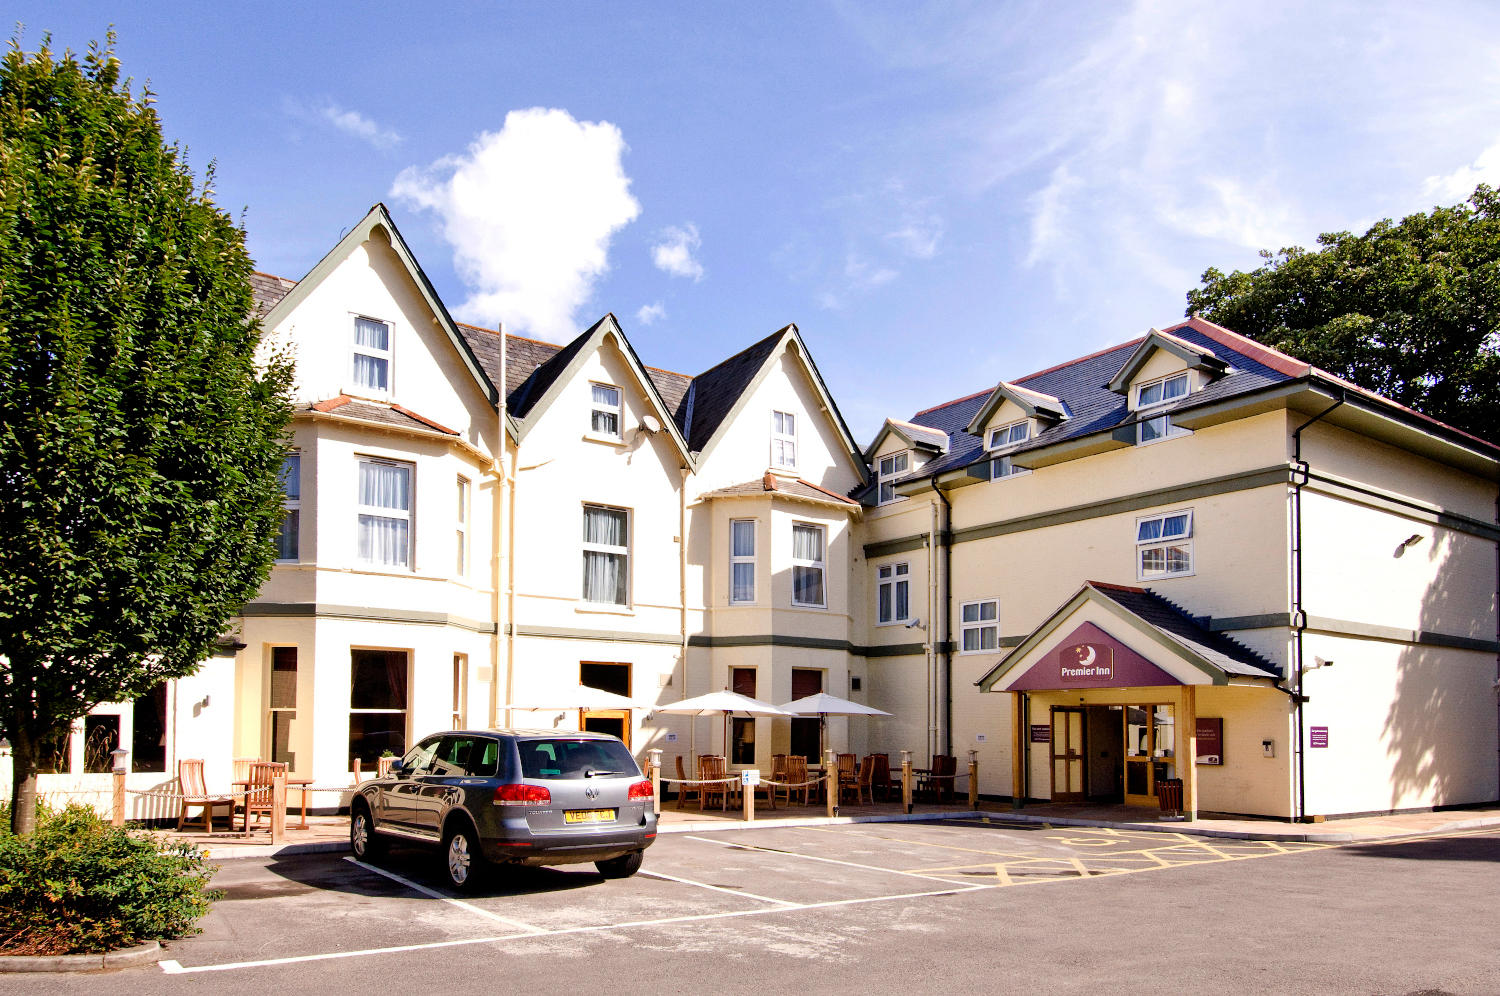 Premier Inn Bournemouth East (Boscombe) hotel exterior Premier Inn Bournemouth East (Boscombe) hotel Bournemouth 03337 773931